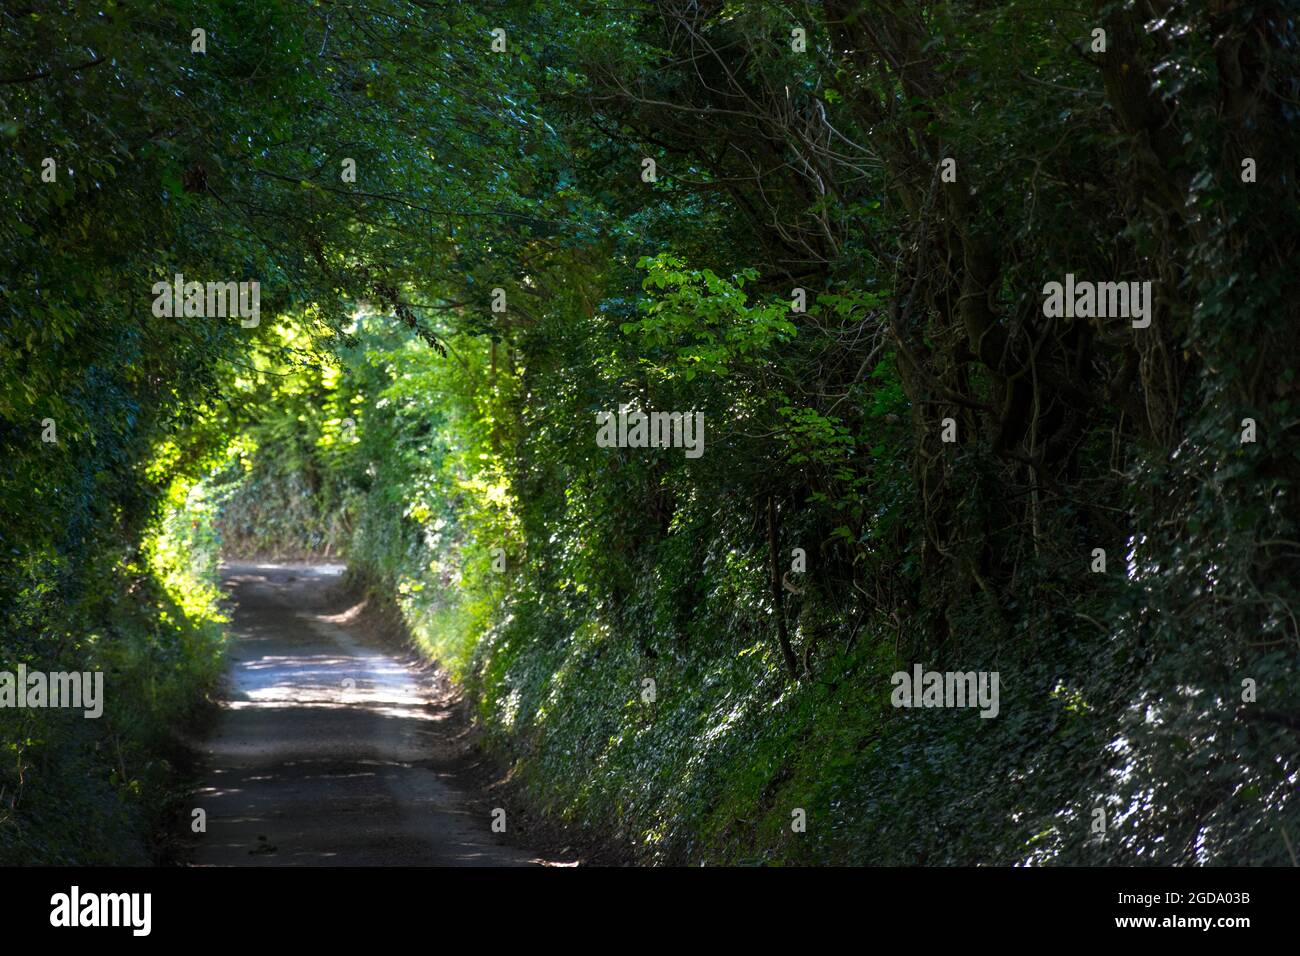 Rural lane enclosed by overhanging trees, Batheaston, England, UK Stock Photo